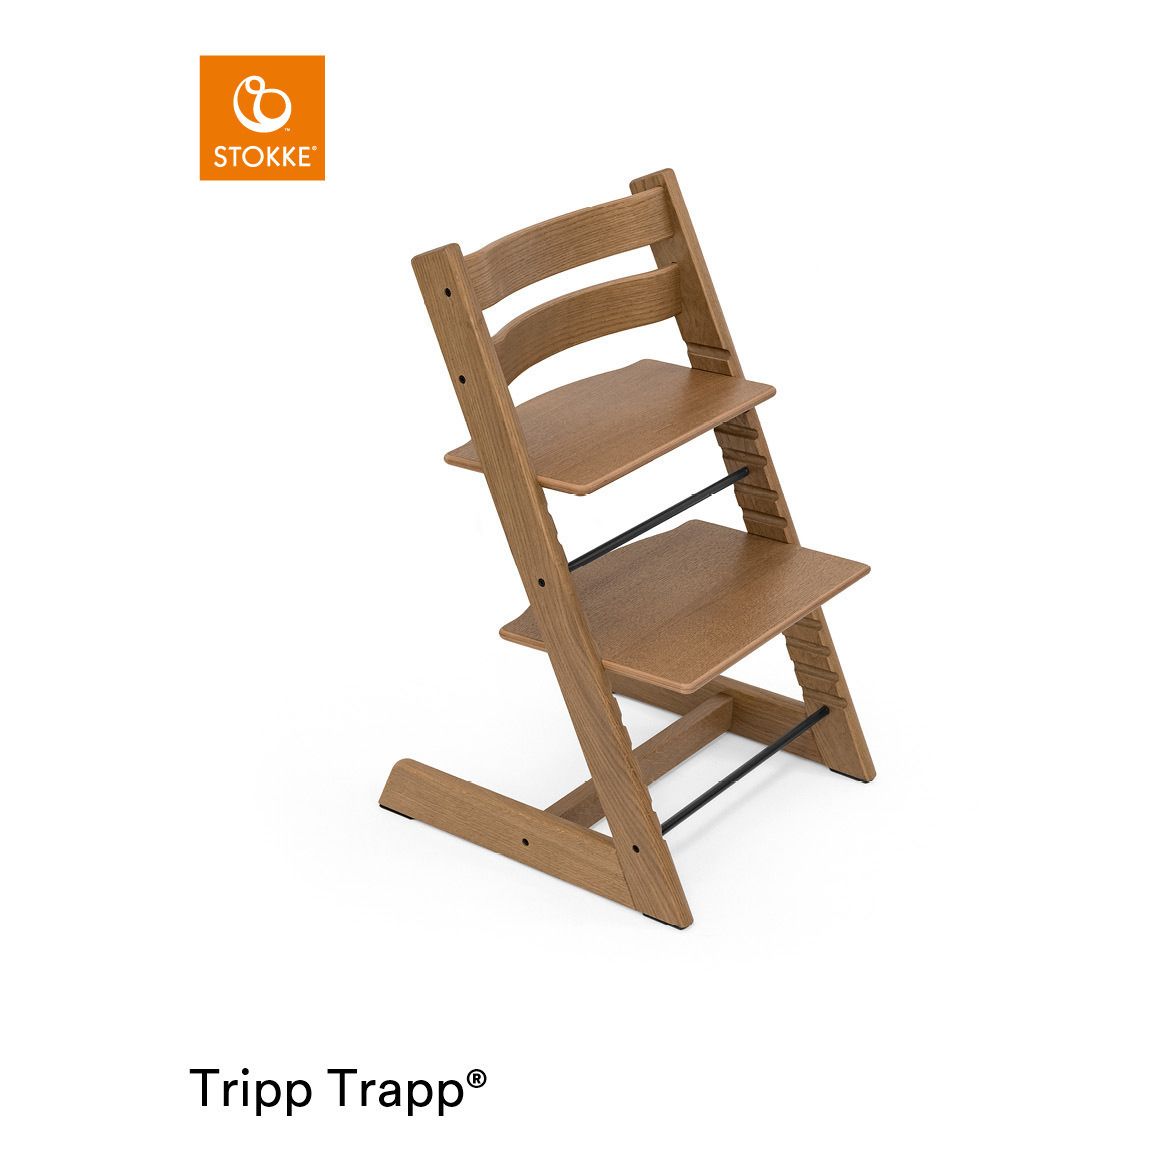 Chaise haute en chêne Tripp Trapp® (Stokke®) - Image 1